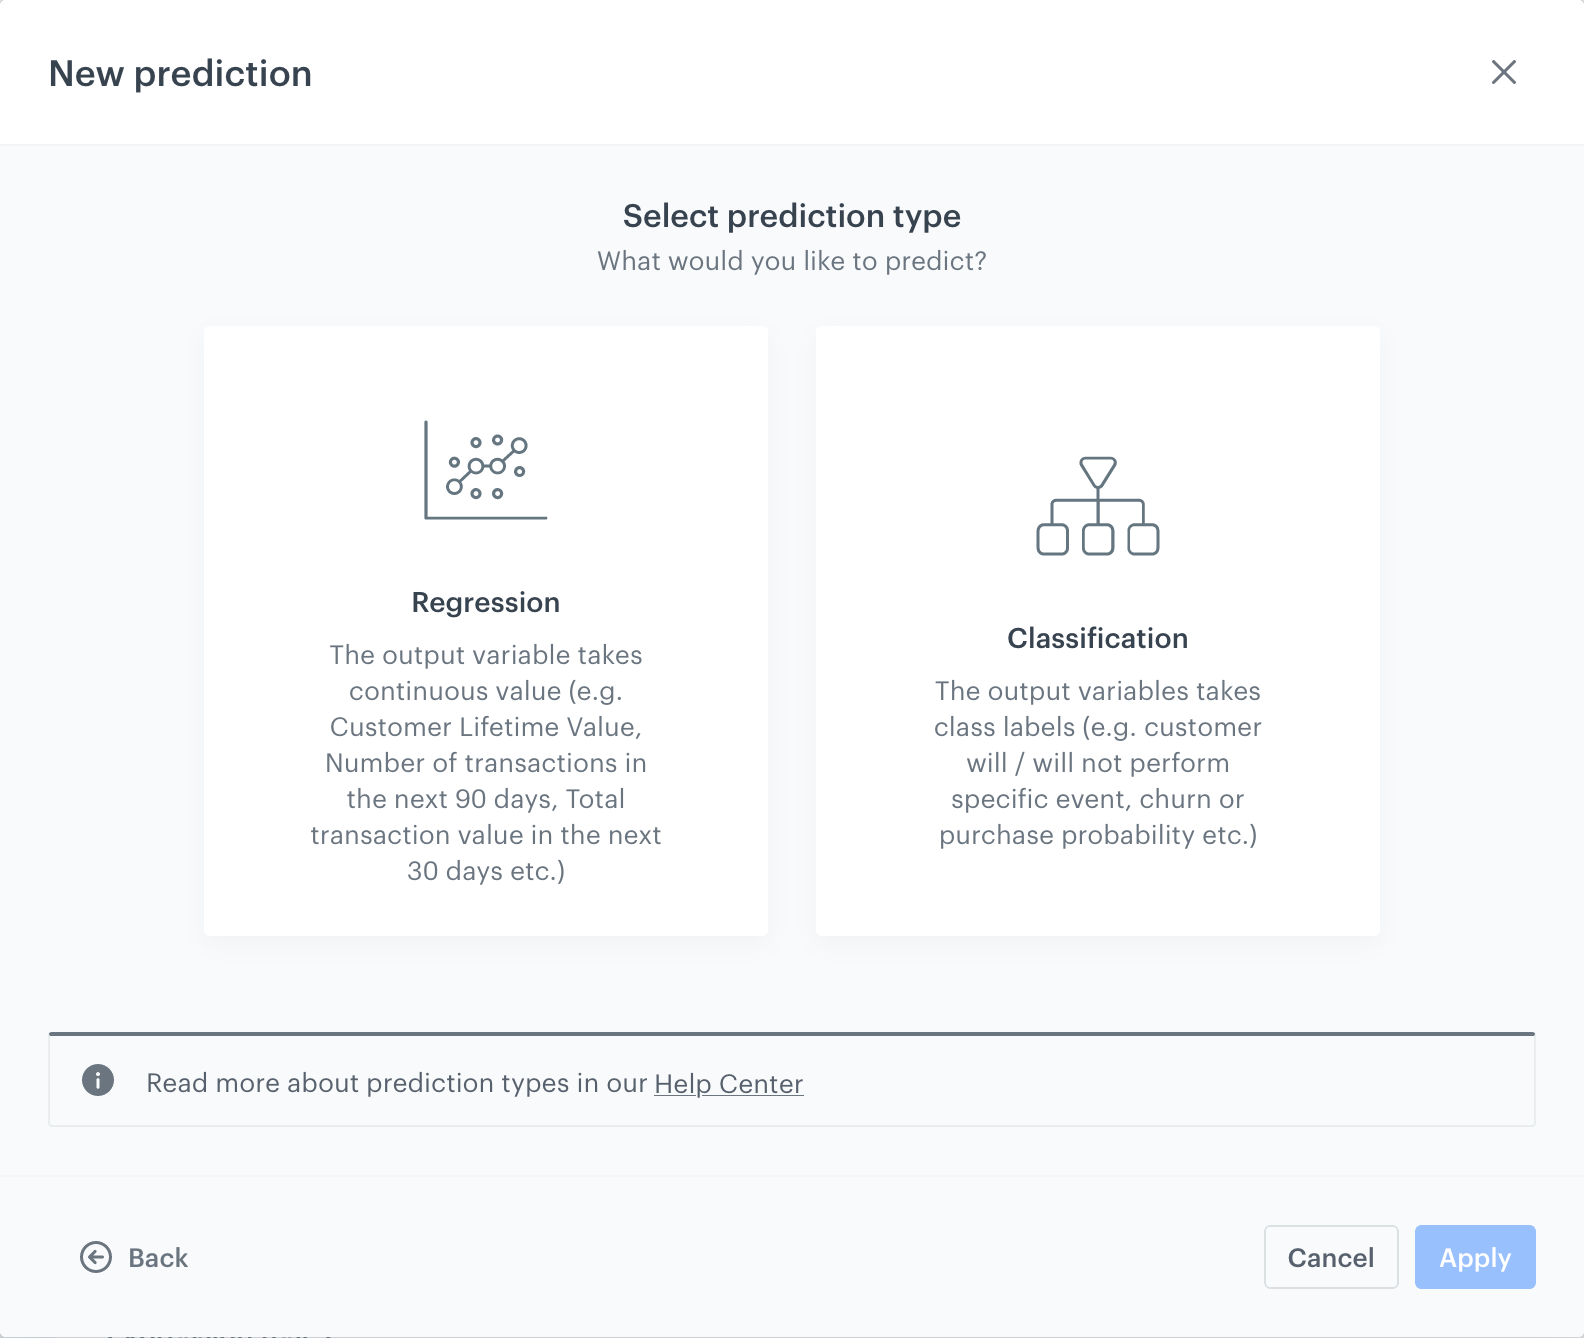 Prediction types